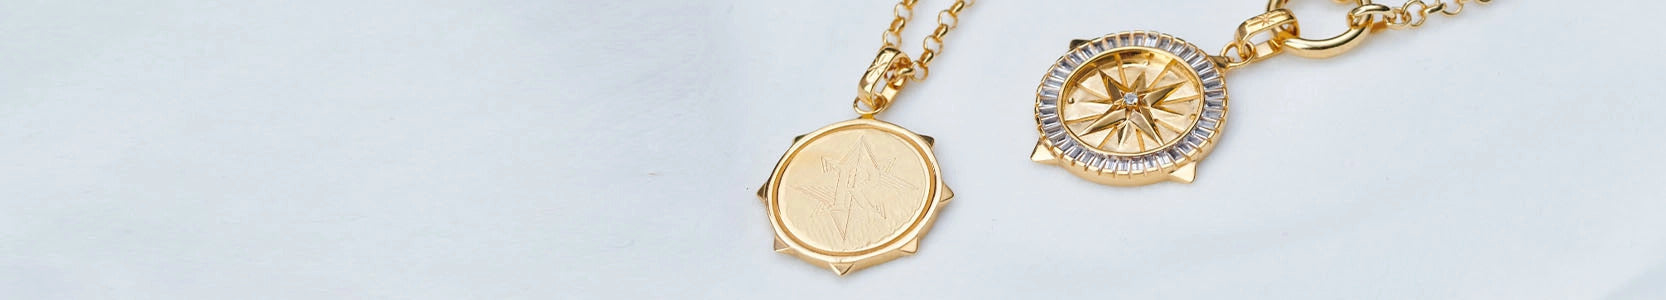 Gold Northstar necklace 50% in Summer Sale